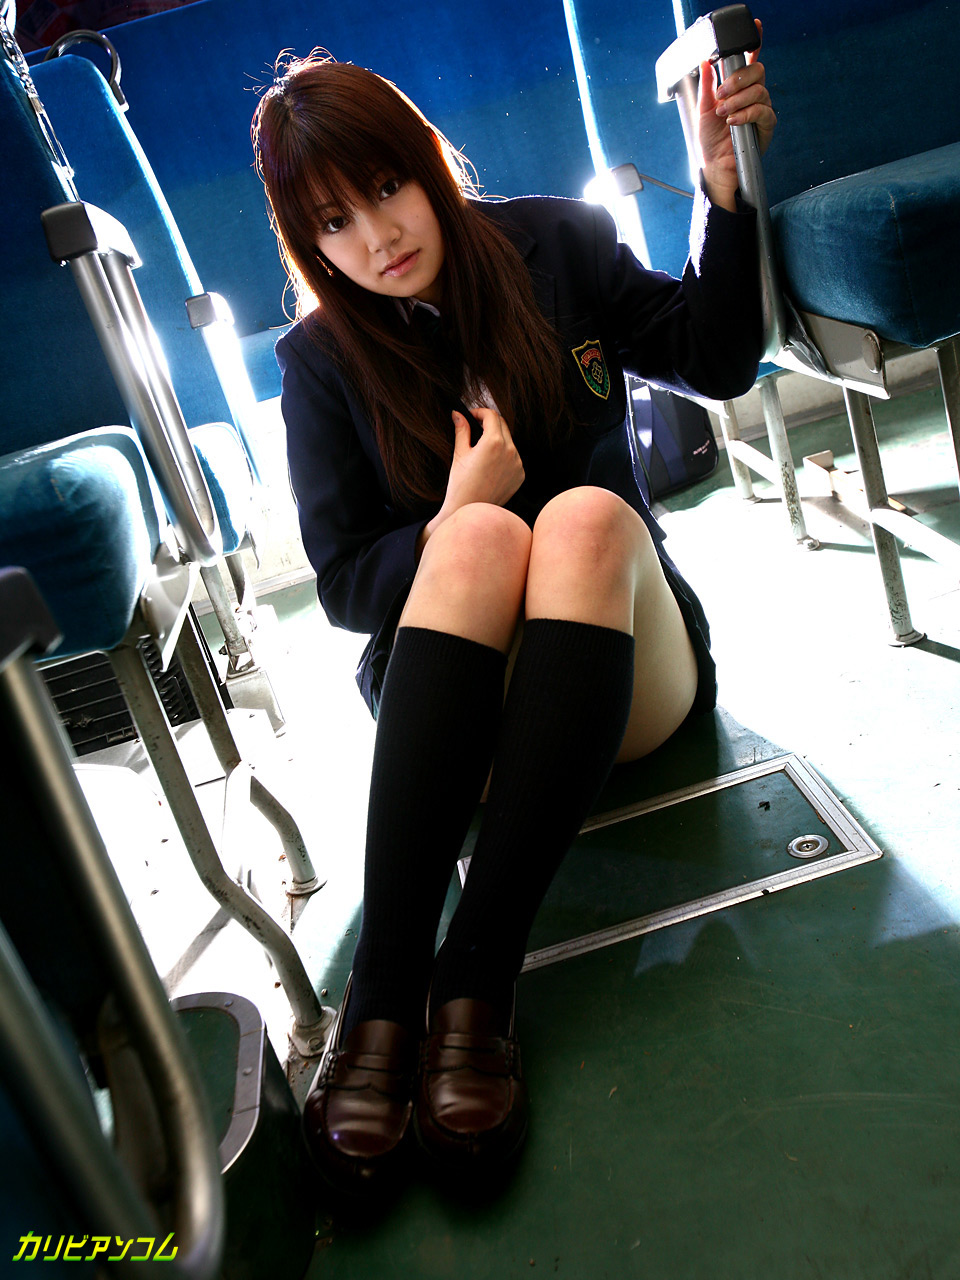 Japanese Schoolgirl With Huge Tits Yayoi Yoshino Gets Nailed On The Bus